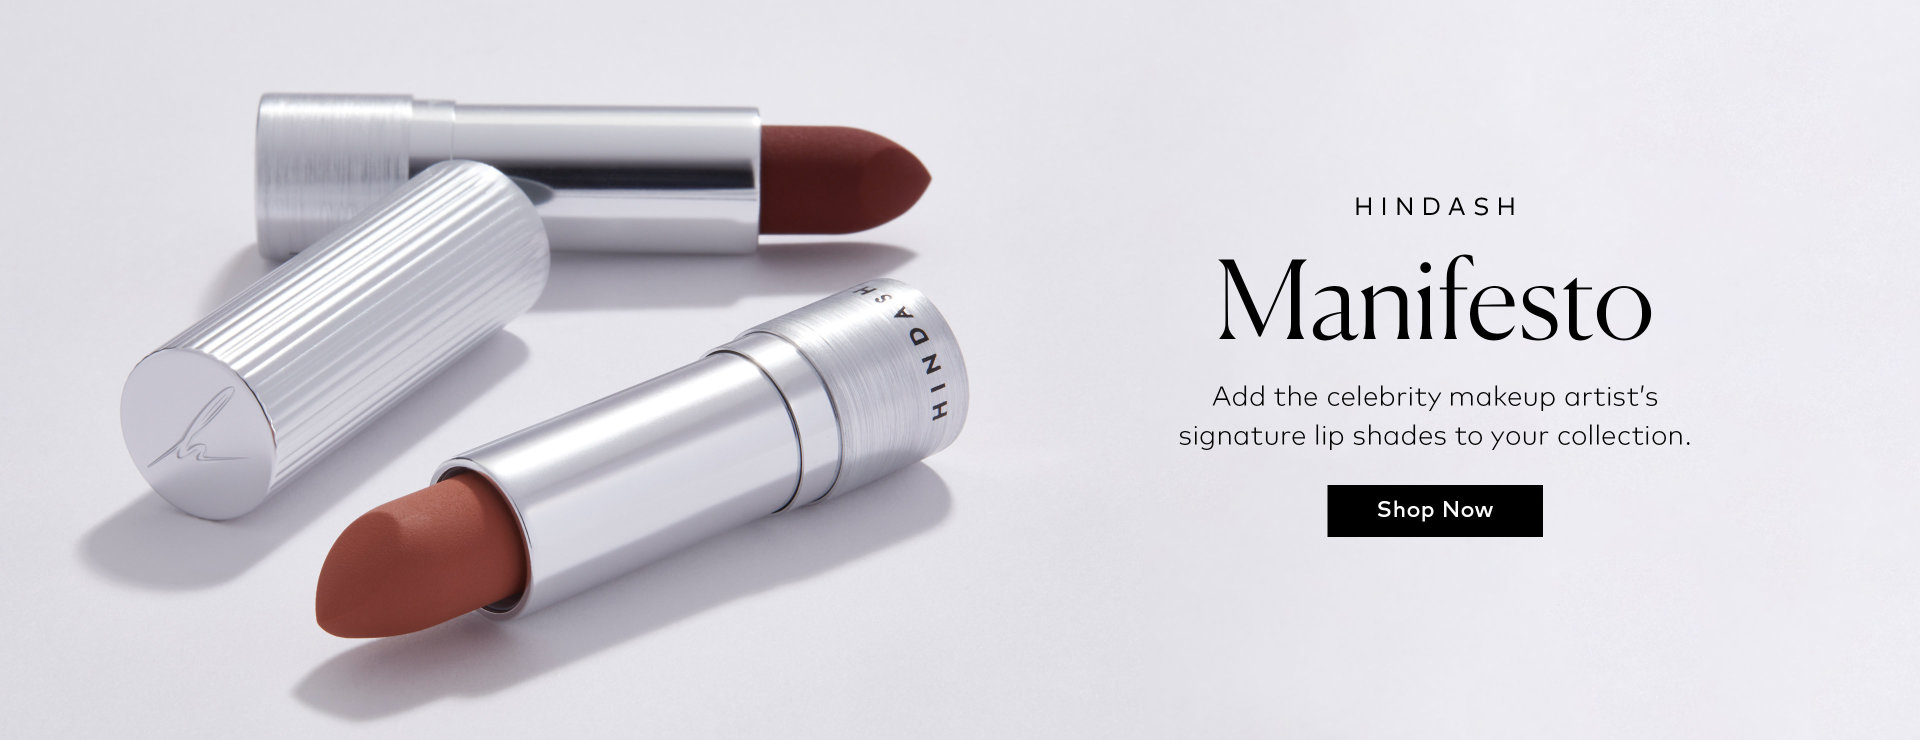 Shop the Hindash Manifesto Lipsticks on Beautylish.com